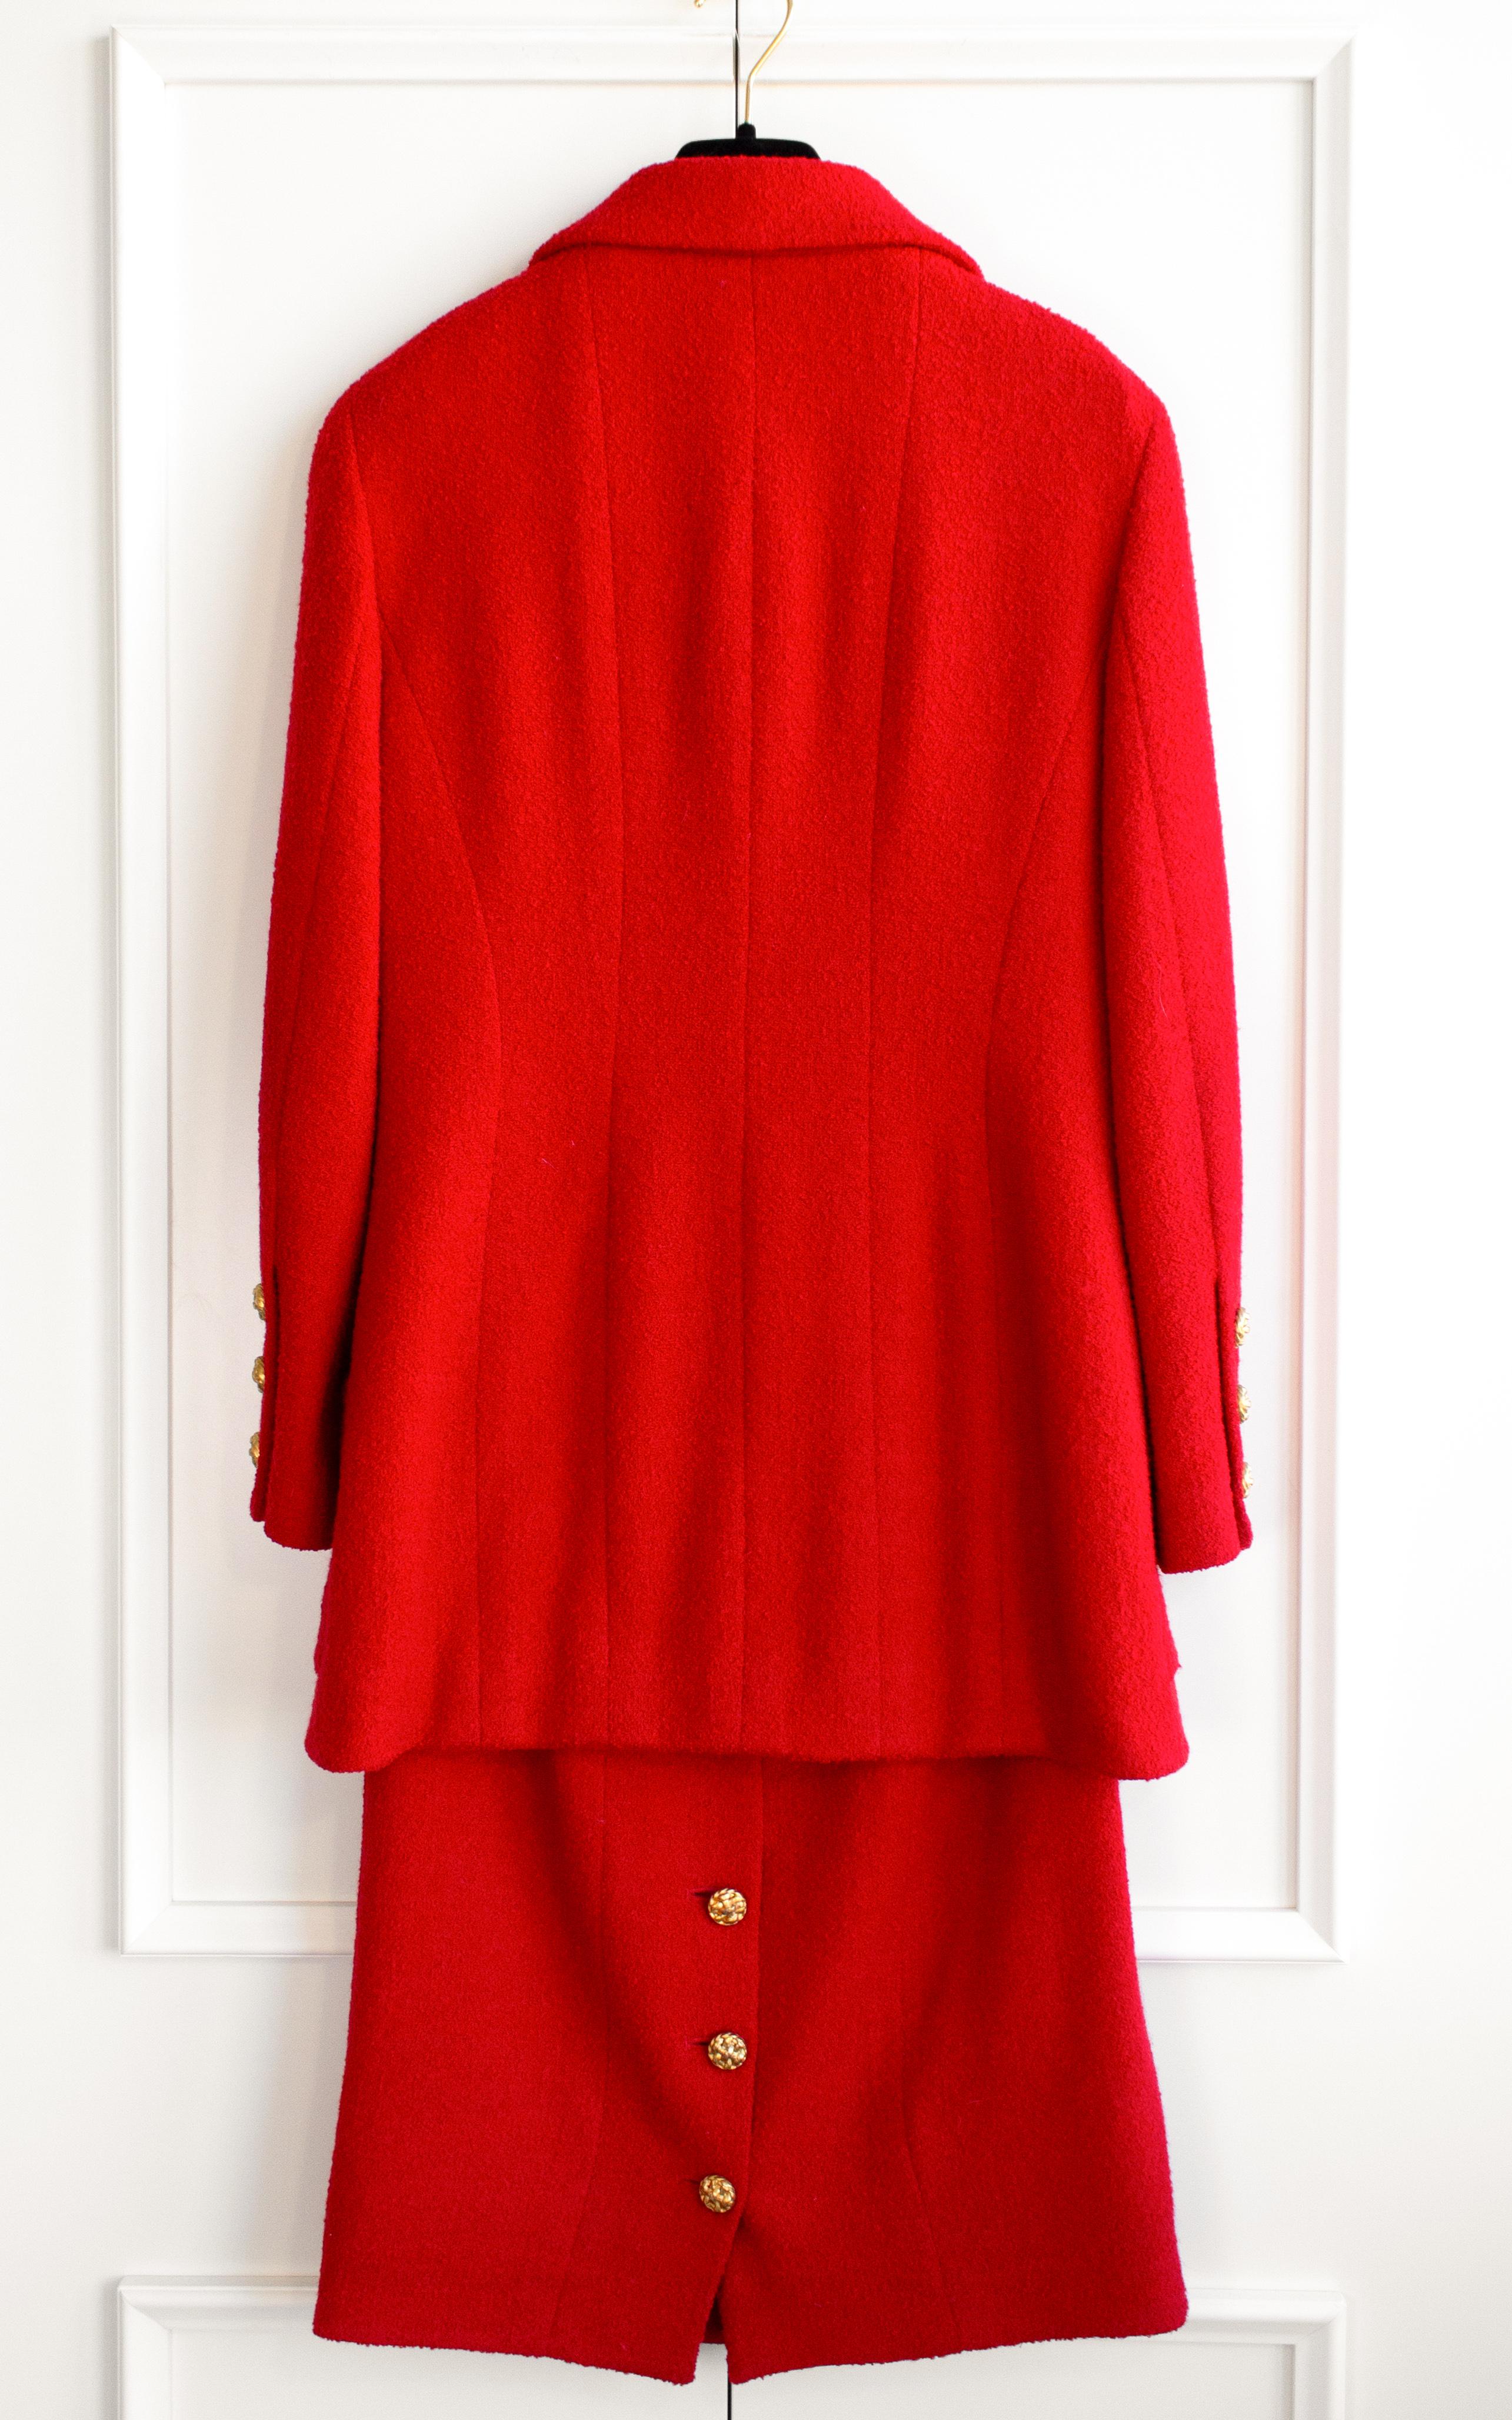 Chanel Vintage Fall/Winter 1992 Runway Parisian Red Gold Tweed Jacket Skirt Suit 1